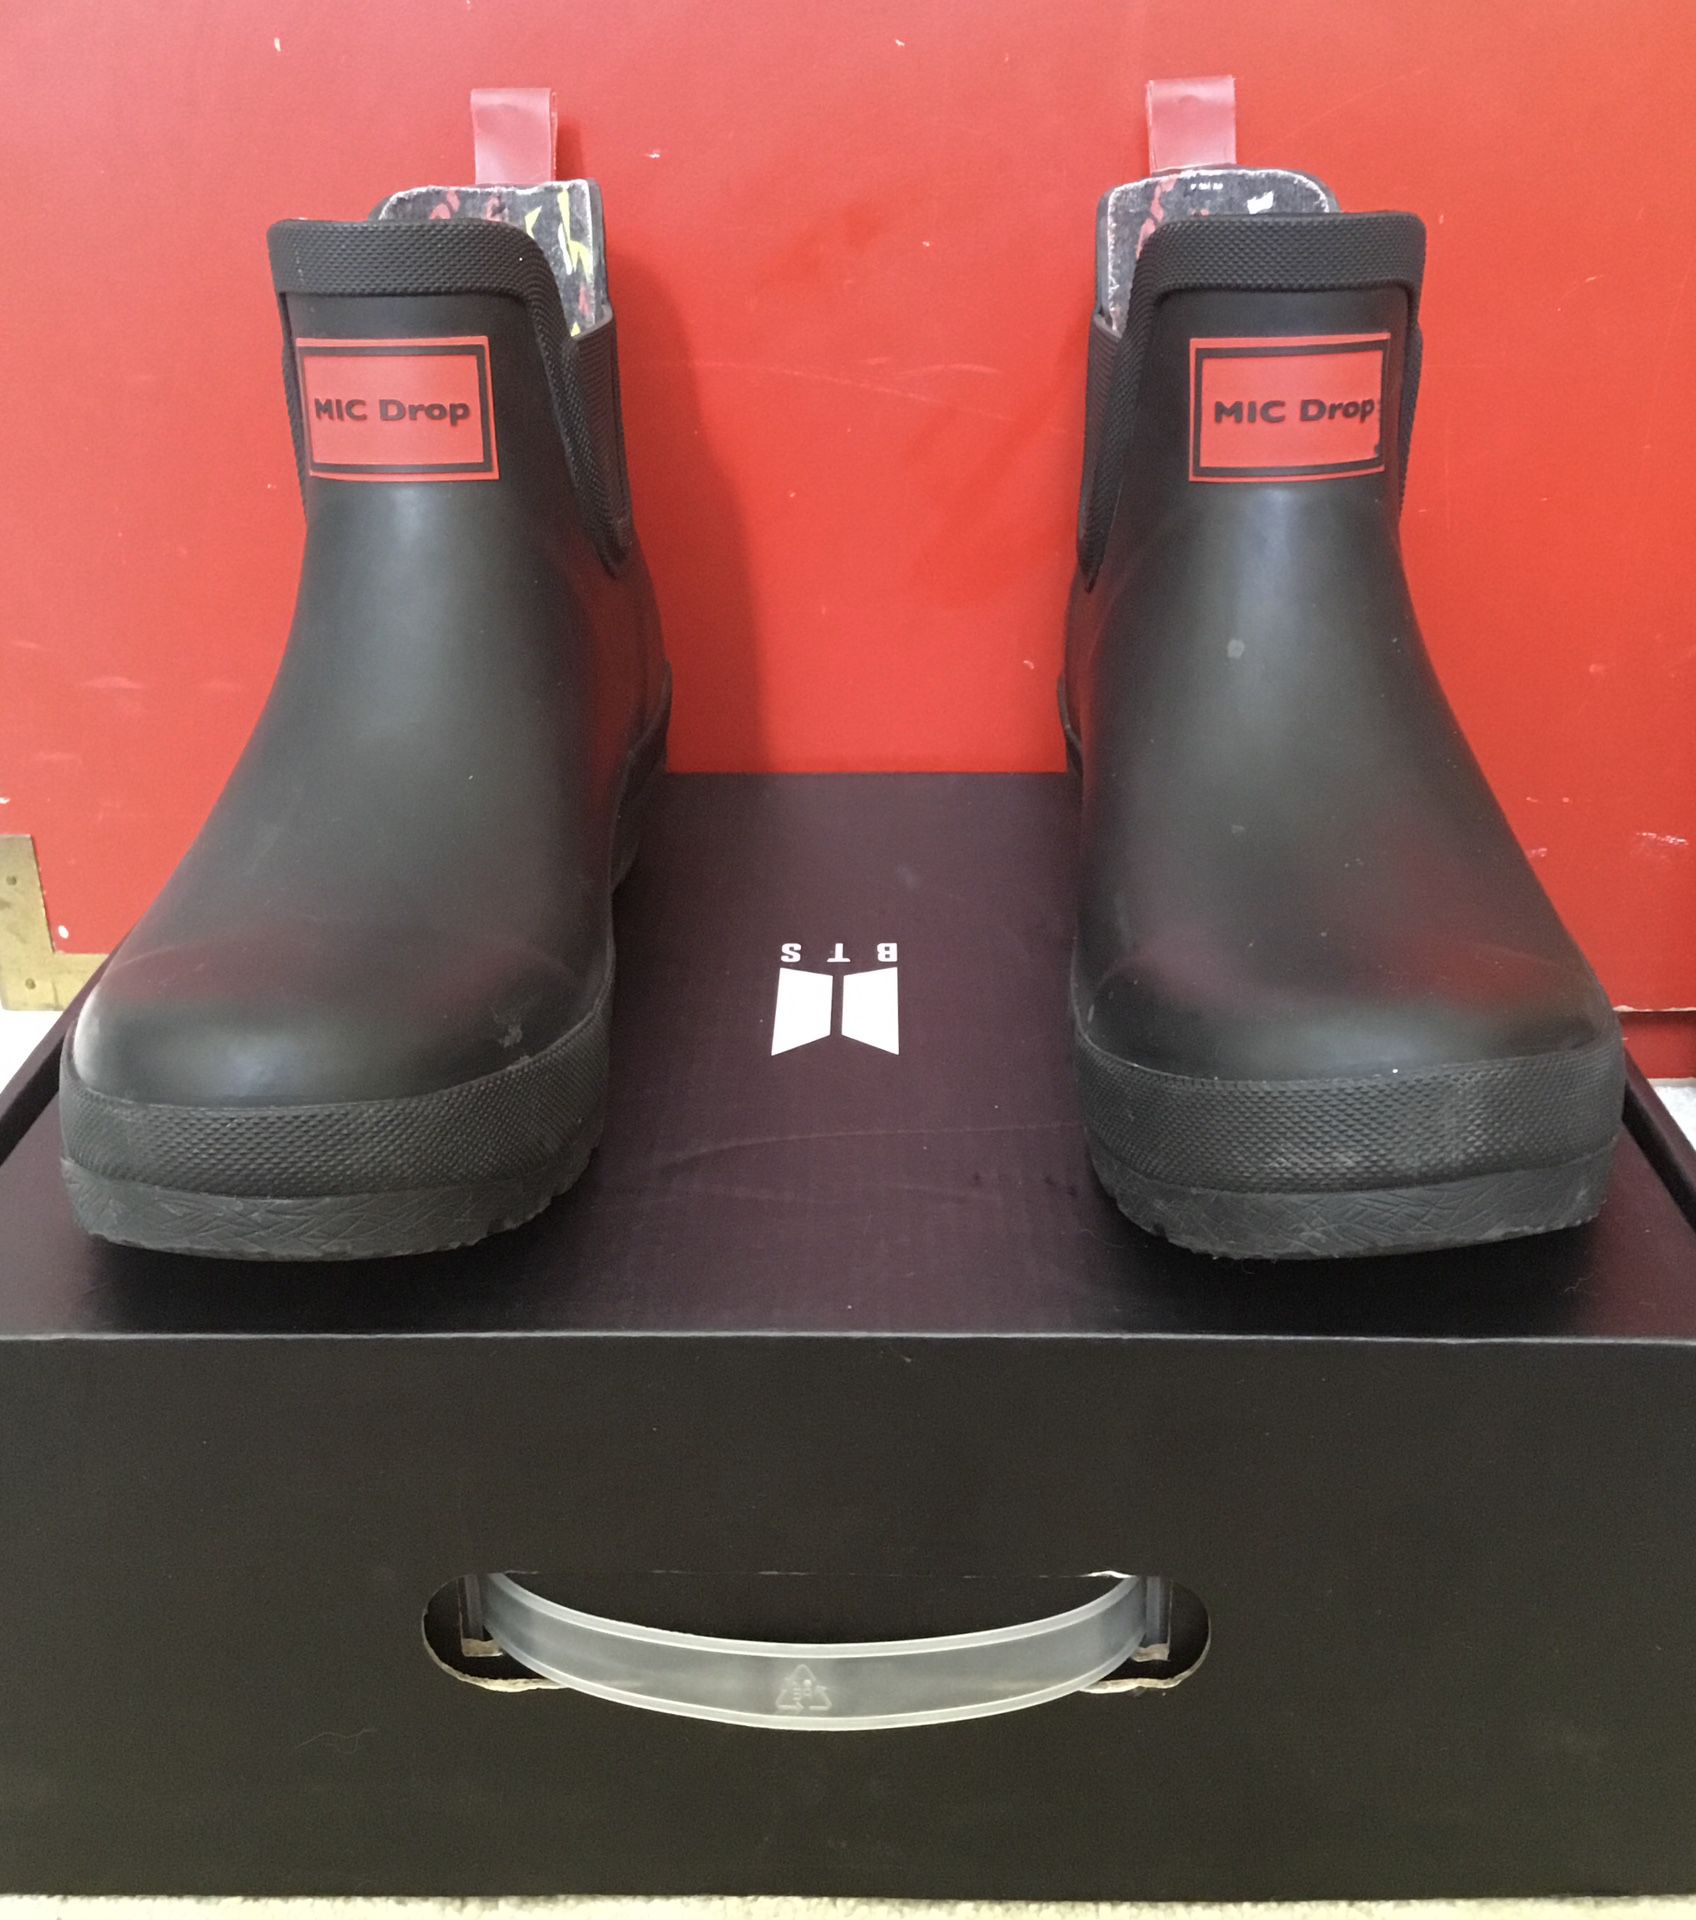 Mic drop BTS black rubber rain boots